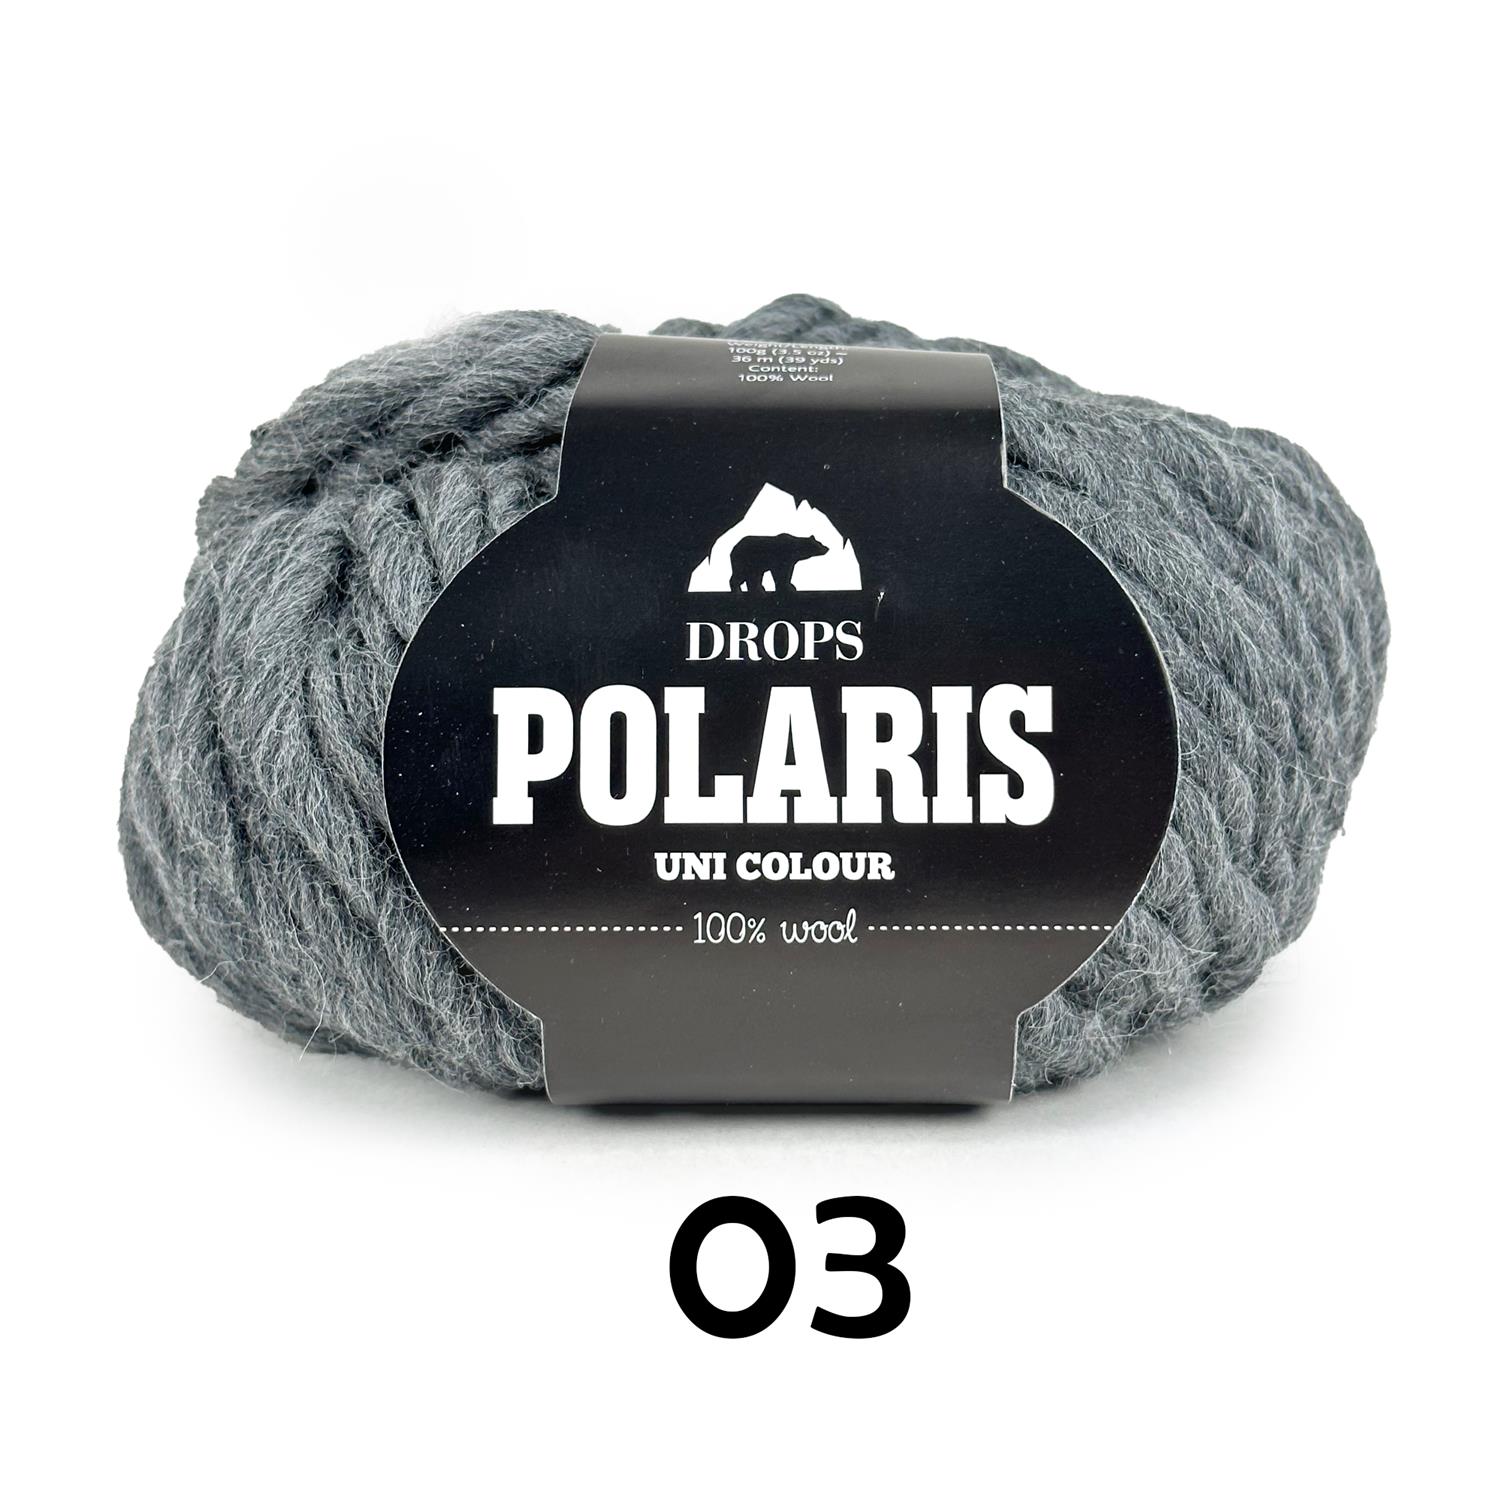 DROPS Polaris Uni Colour (100g/36m) 03 dunkelgrau